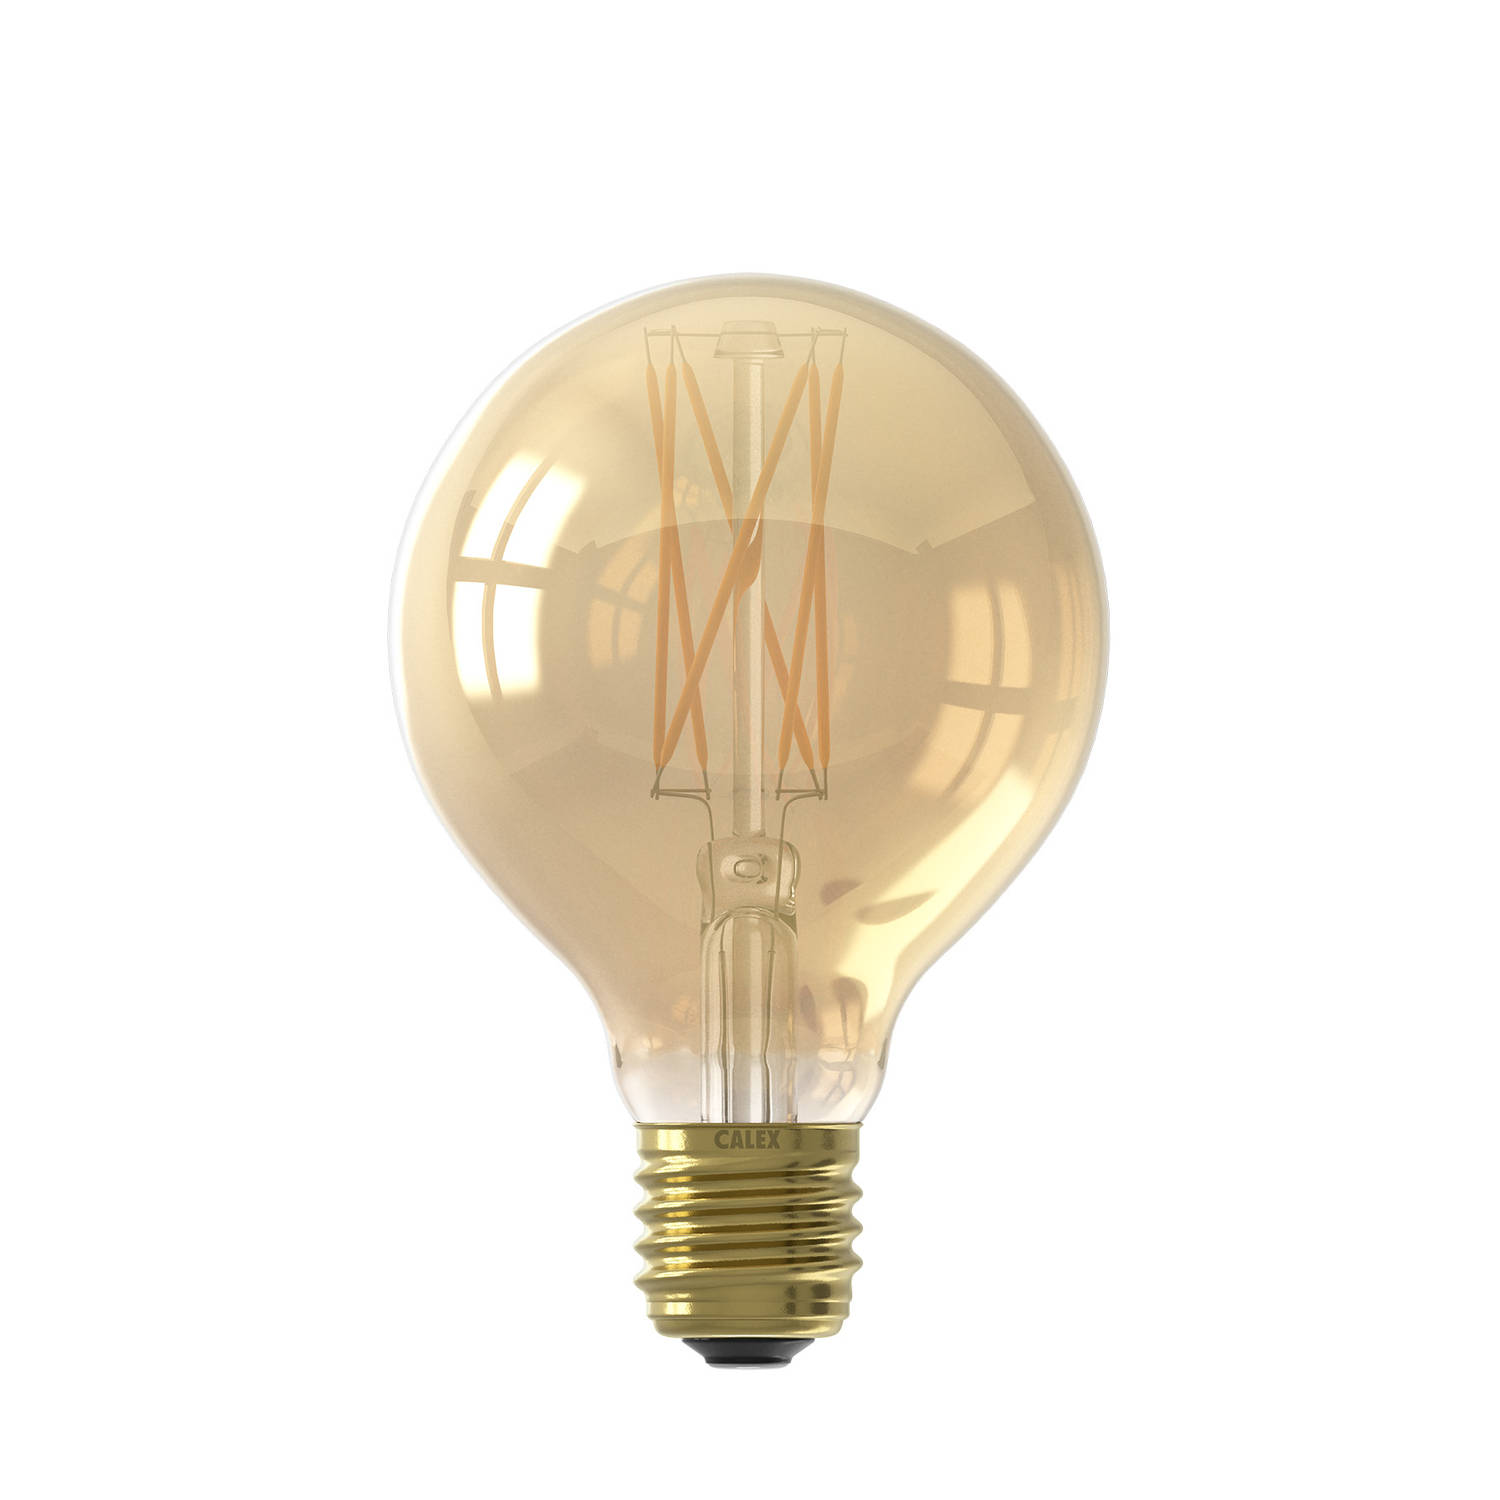 Doordeweekse dagen helemaal fout Calex Led Filament Globelamp Dimbaar - 4w - E27 | Blokker